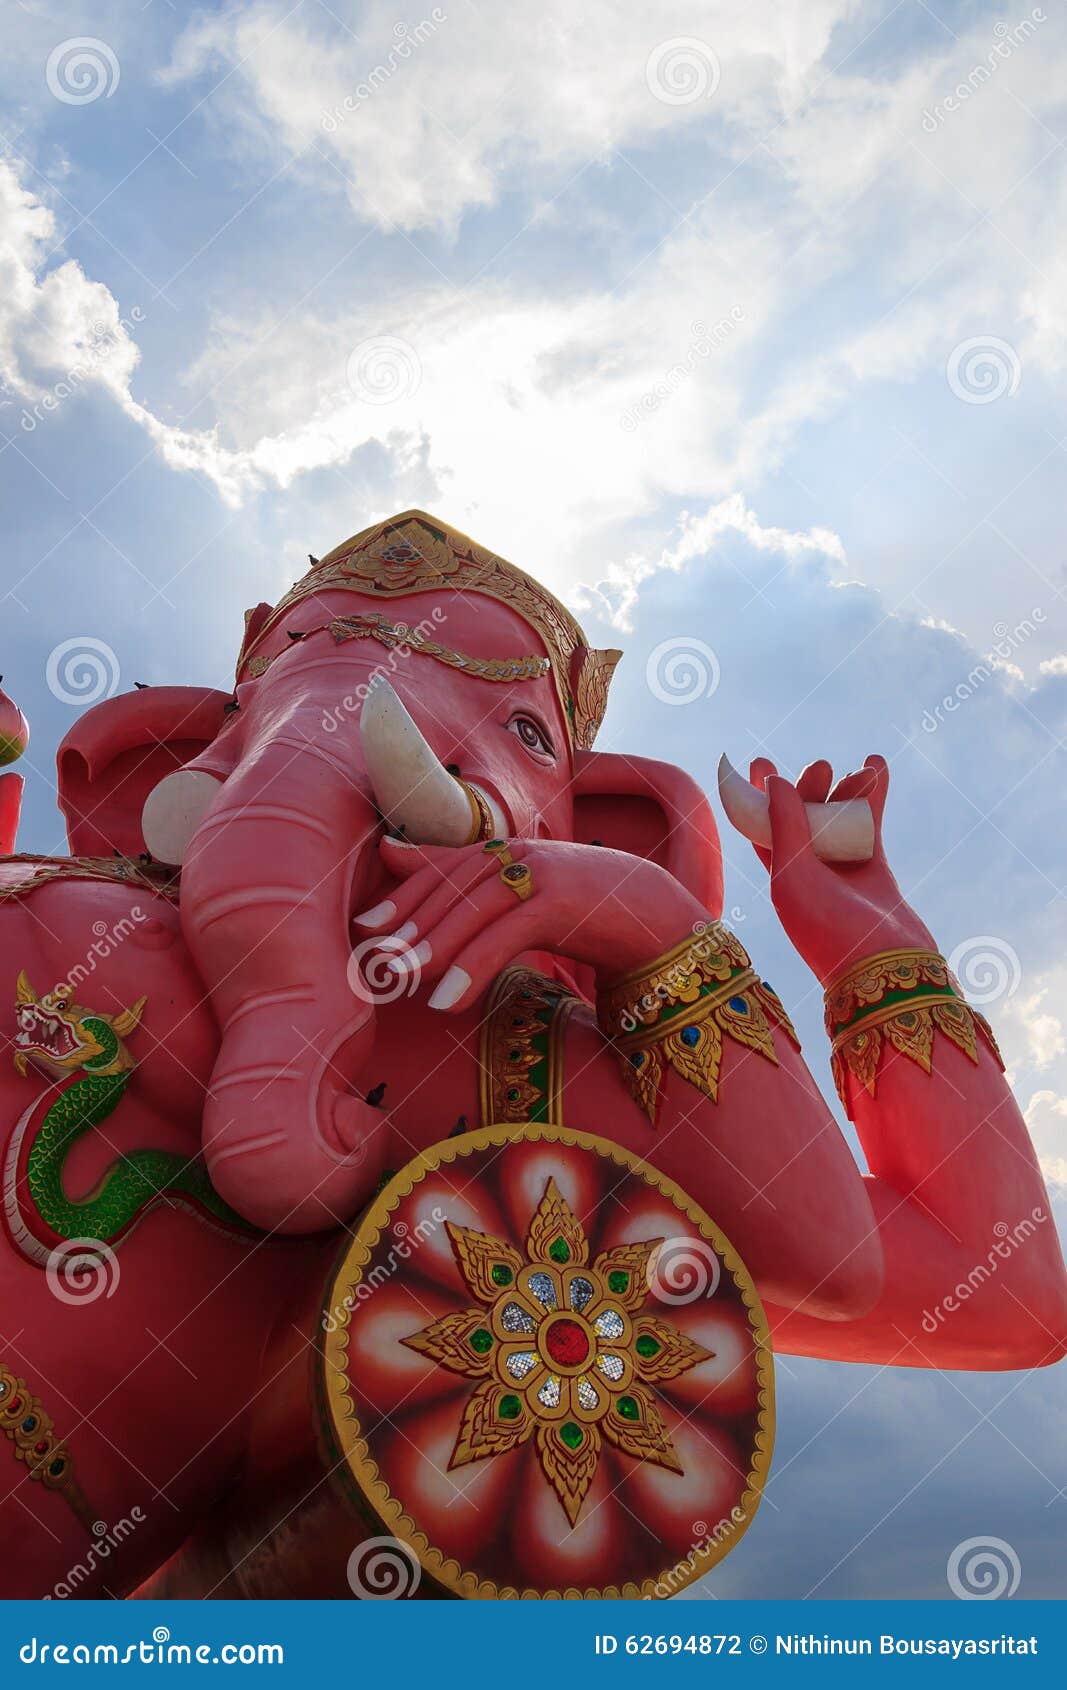 Pink Ganesha Statue stock photo. Image of travel, sculpture - 62694872